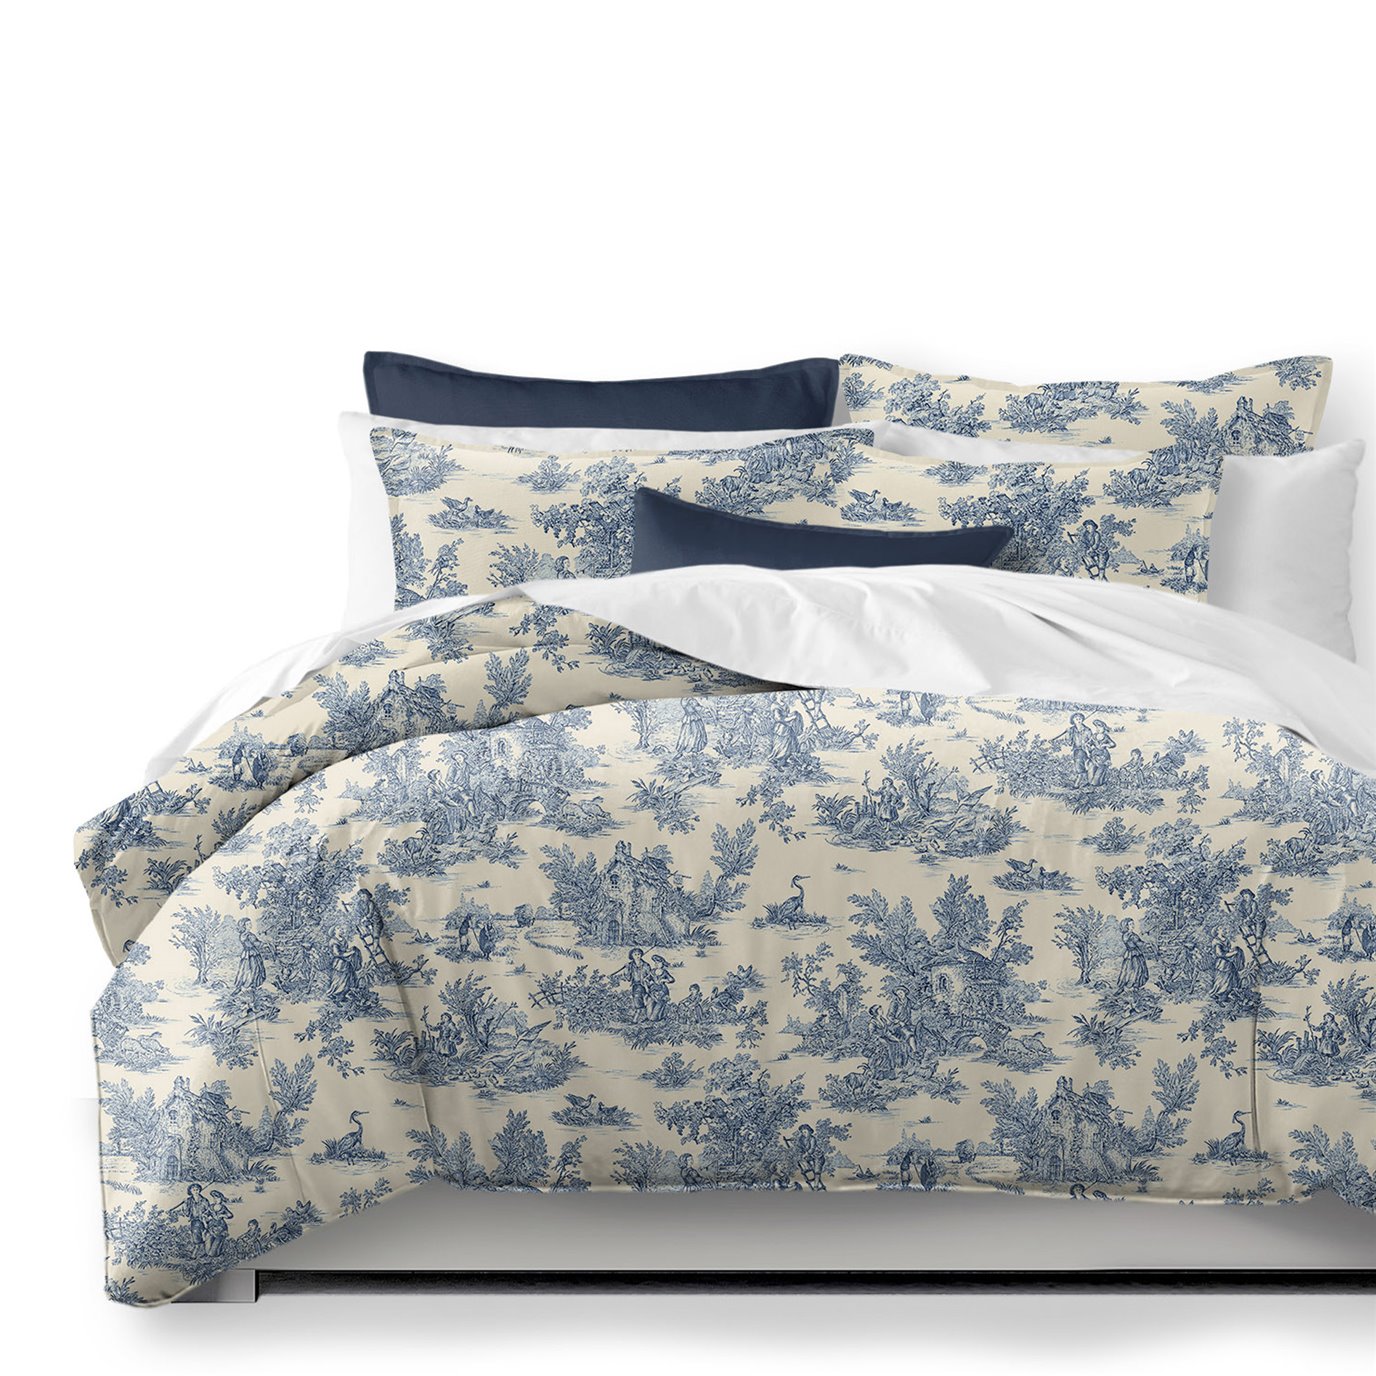 Bouclair Blue Duvet Cover and Pillow Sham(s) Set - Size Twin